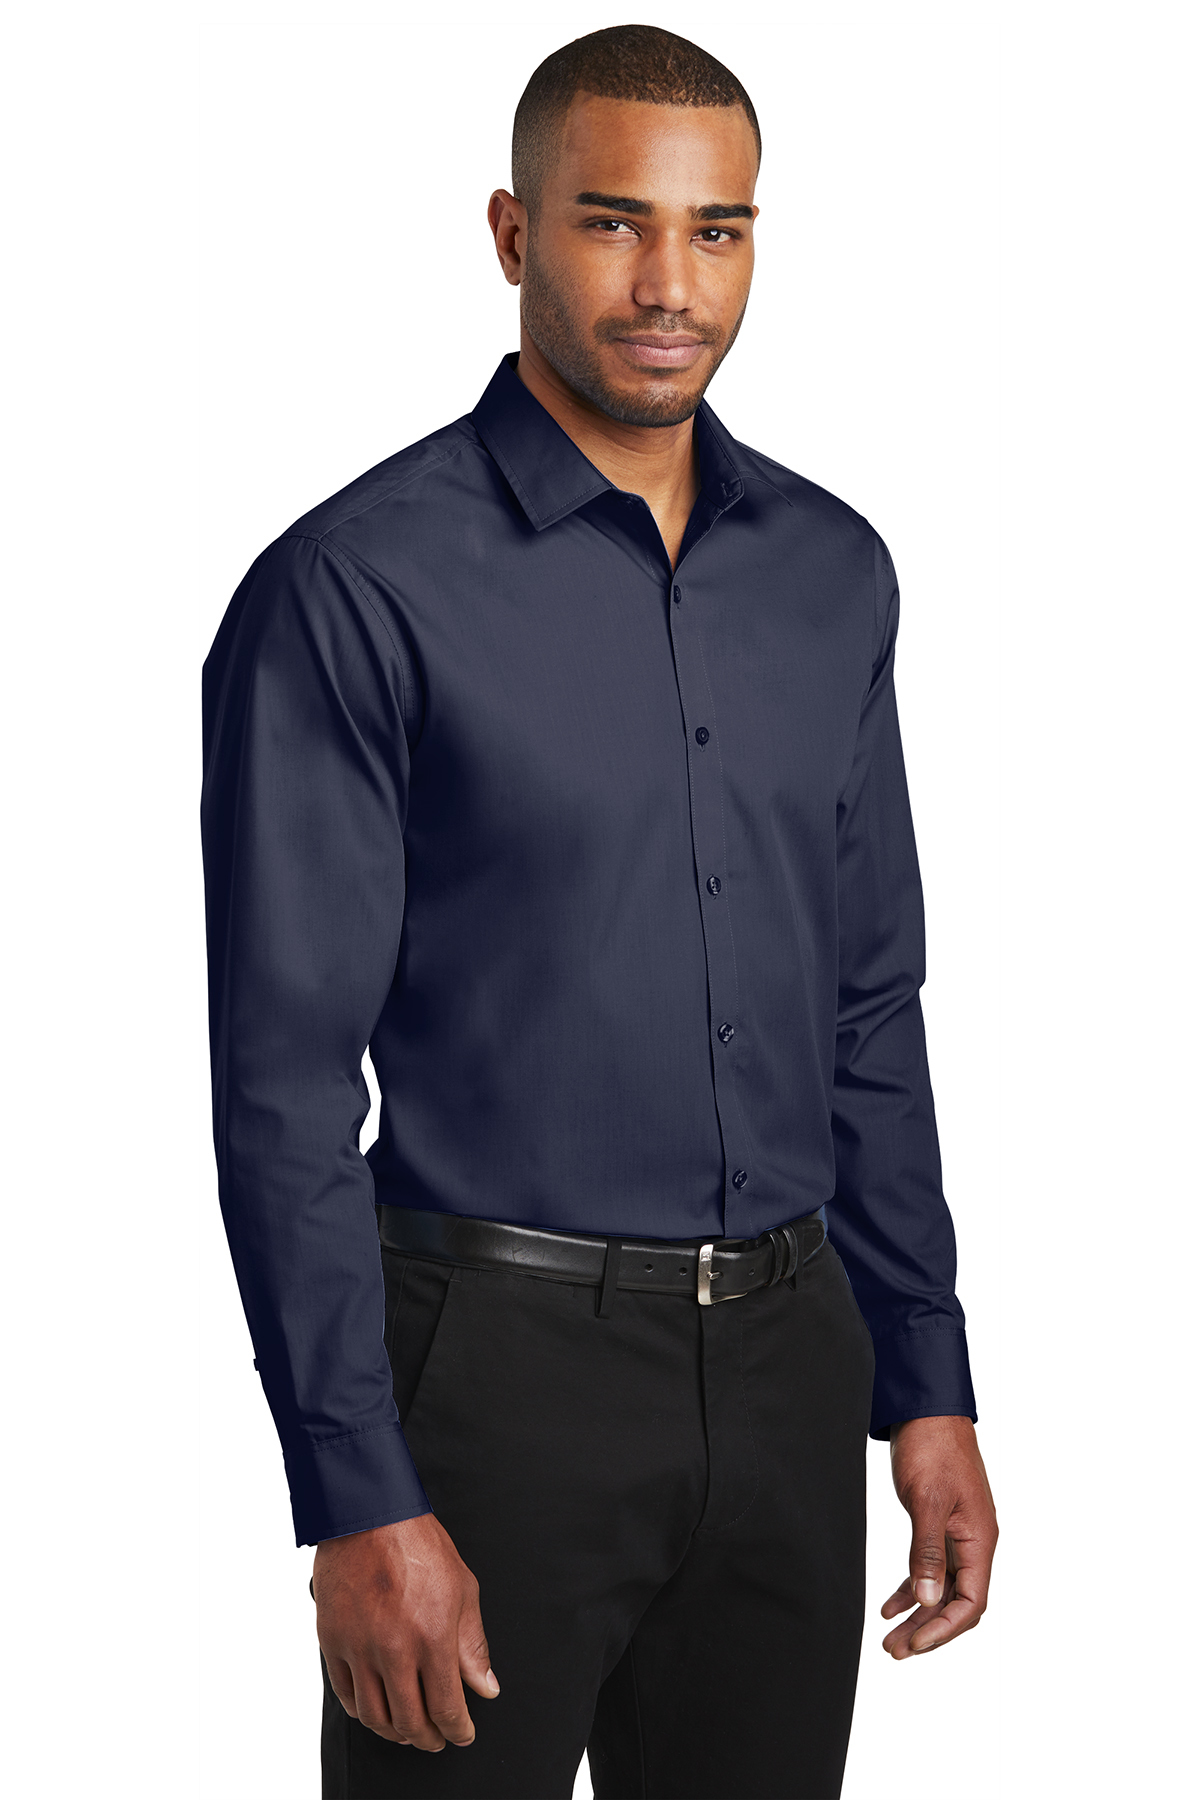 Port Authority Slim Fit Long Sleeve Carefree Poplin Shirt | Product ...